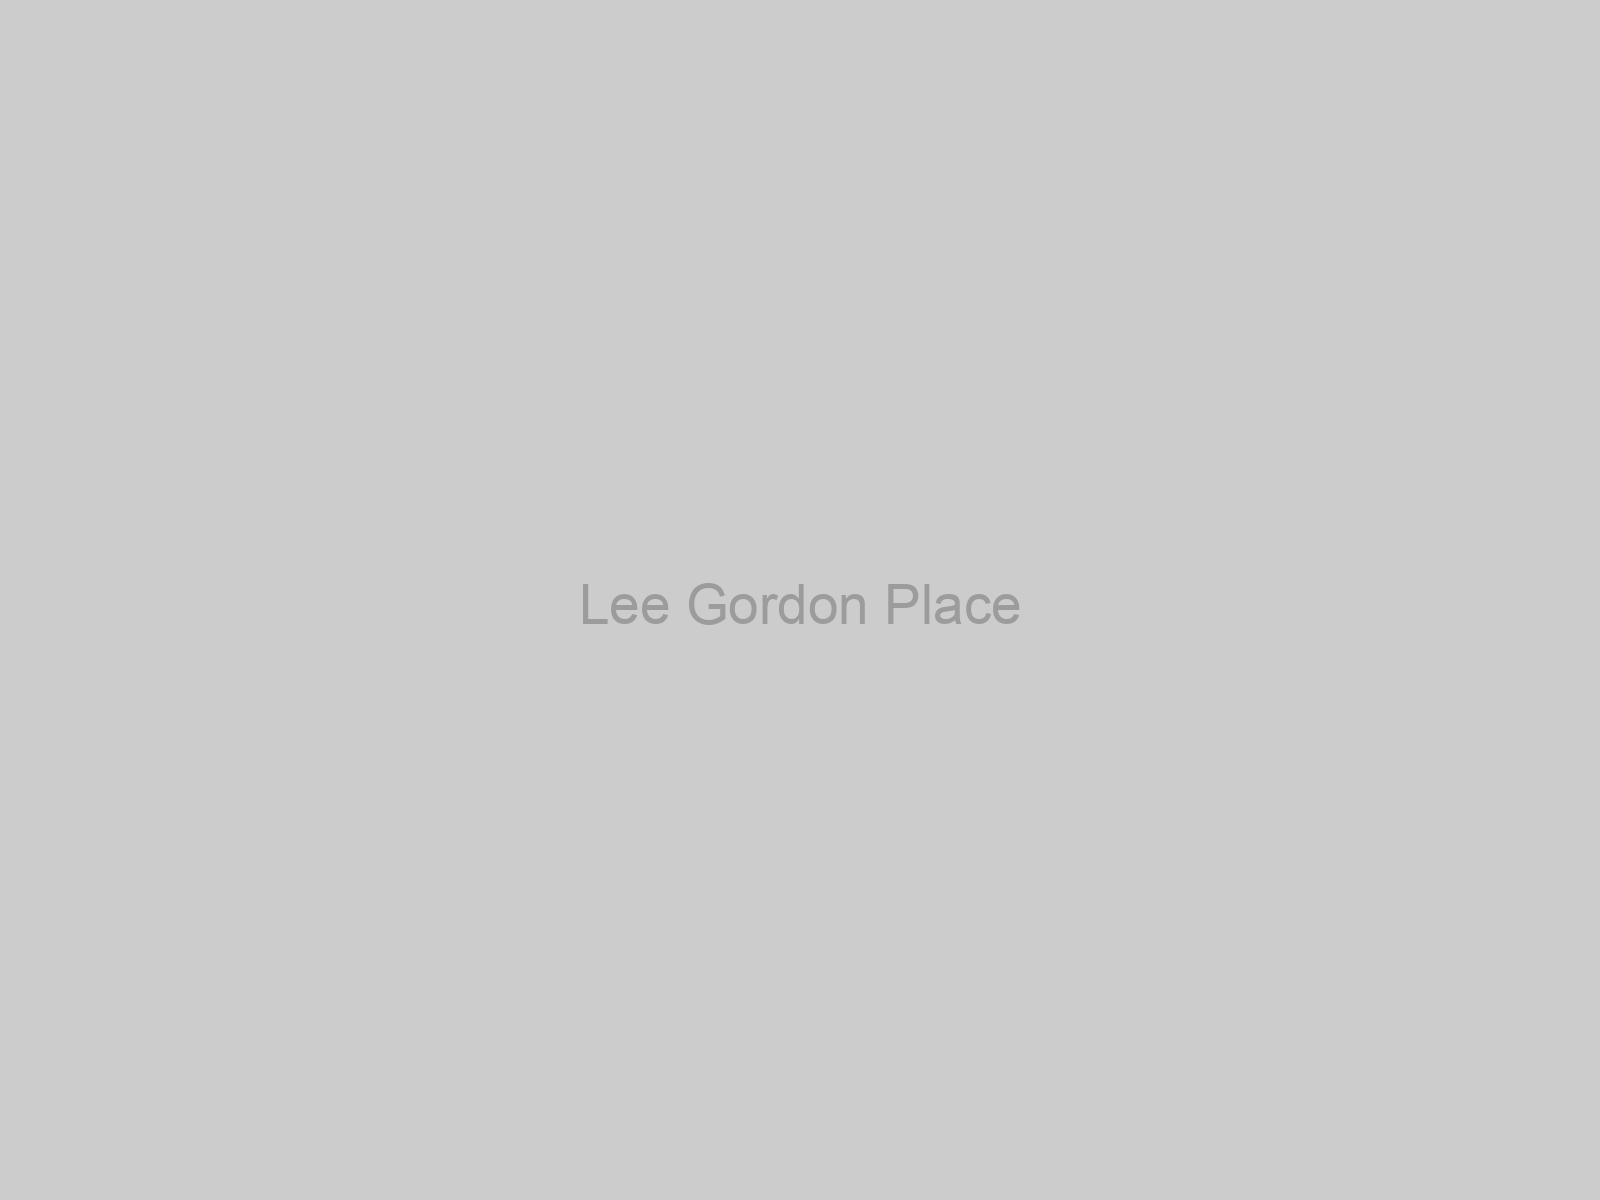 Lee Gordon Place